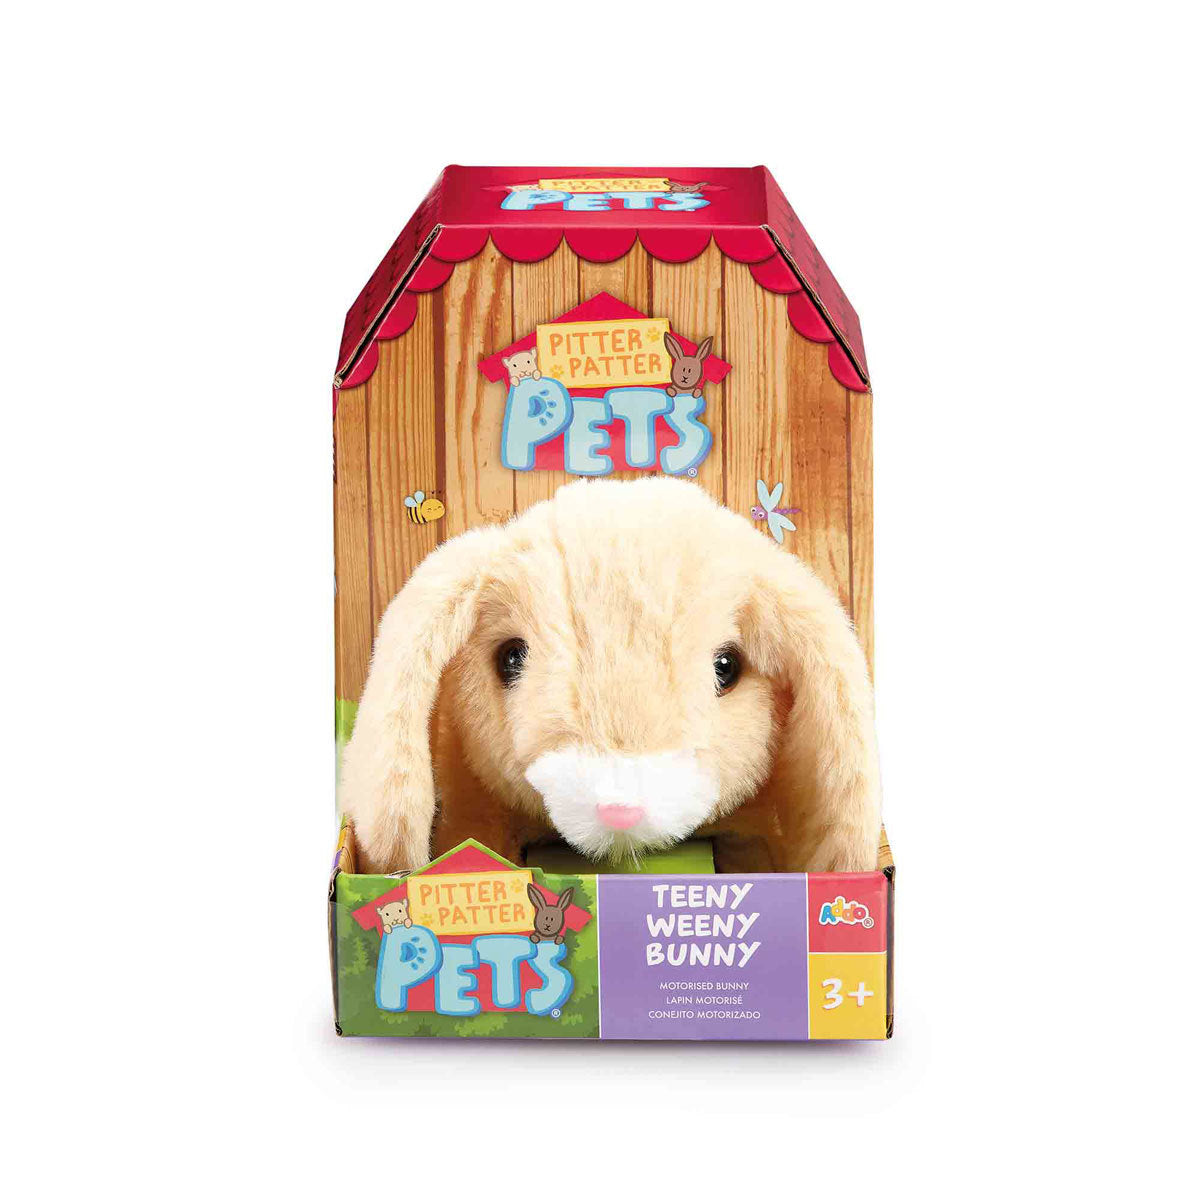 Pitter Patter Pets Teeny Weeny Bunny - Floppy Eared